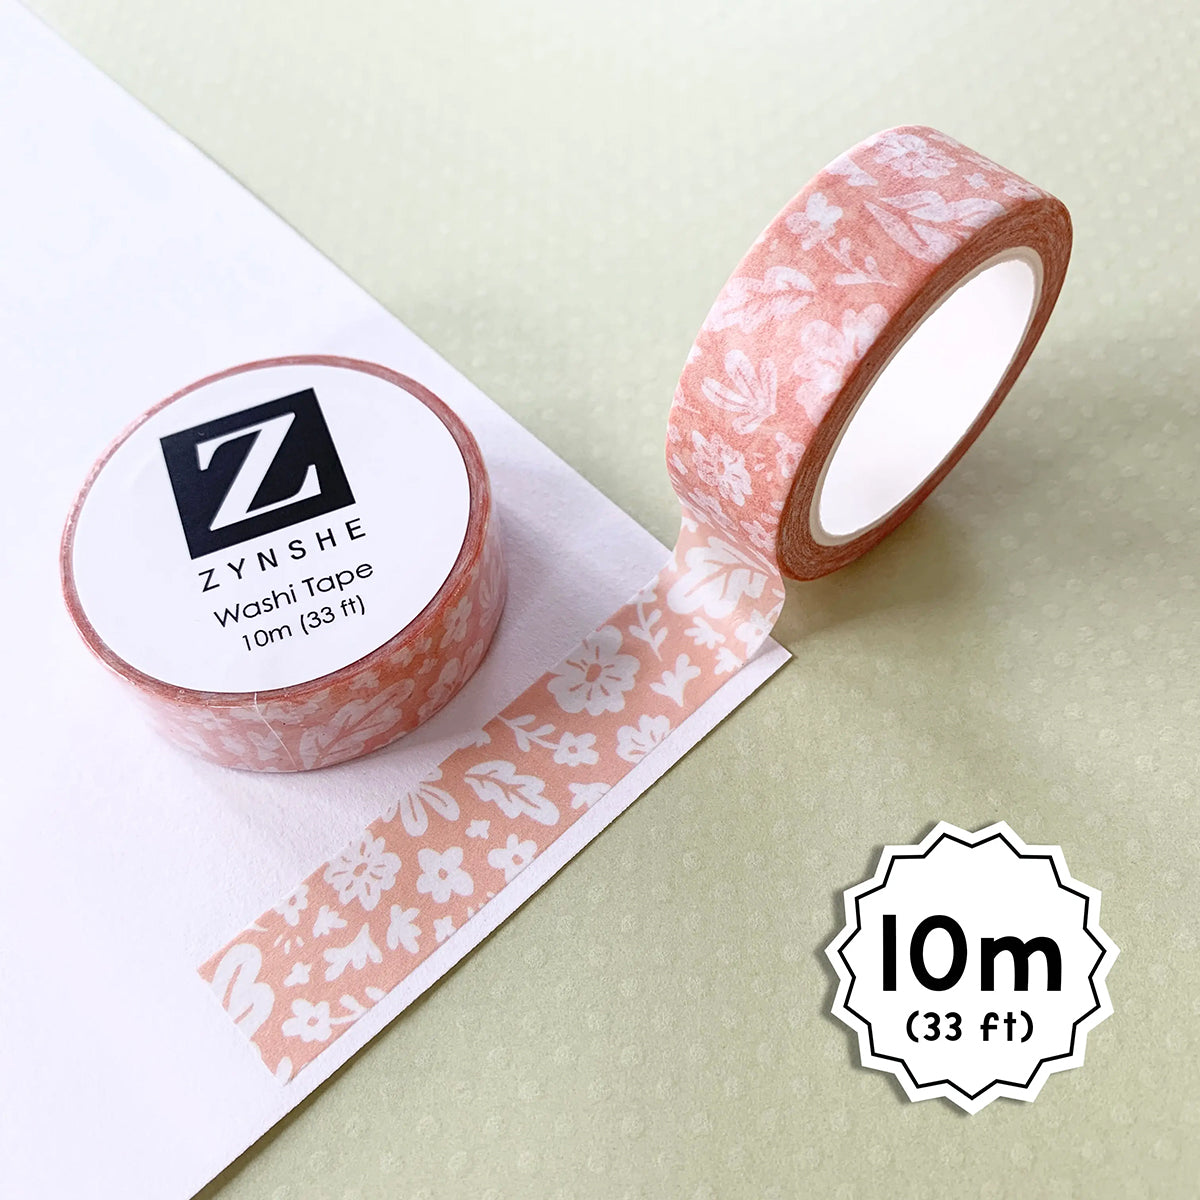 NEW // Zynshe Washi Tape, 10m